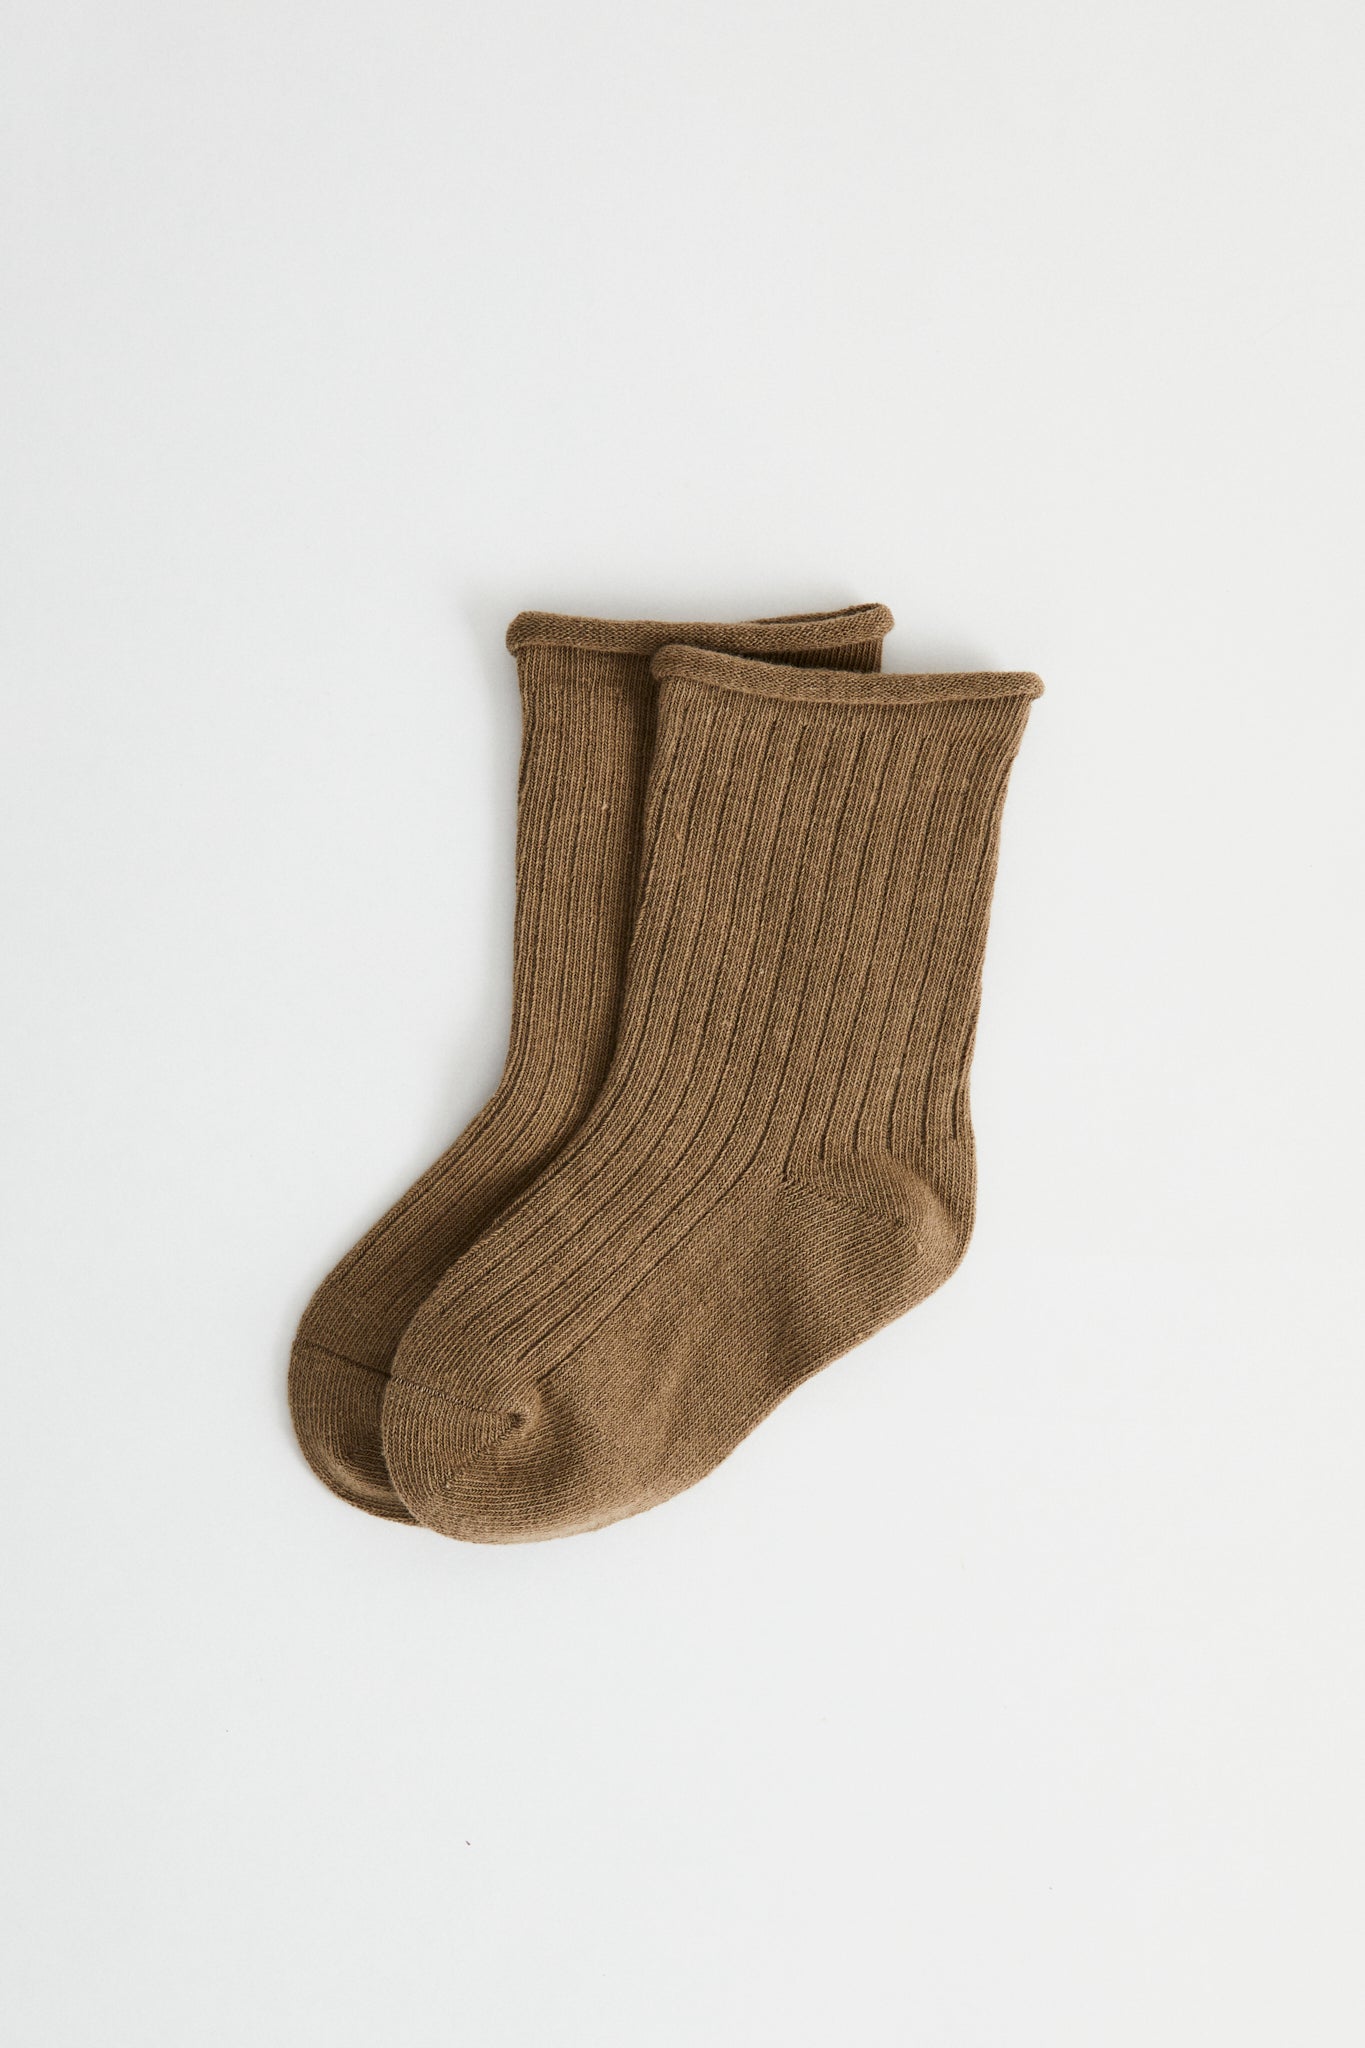 Cocoa coloured ribbed socks, rolled hem.